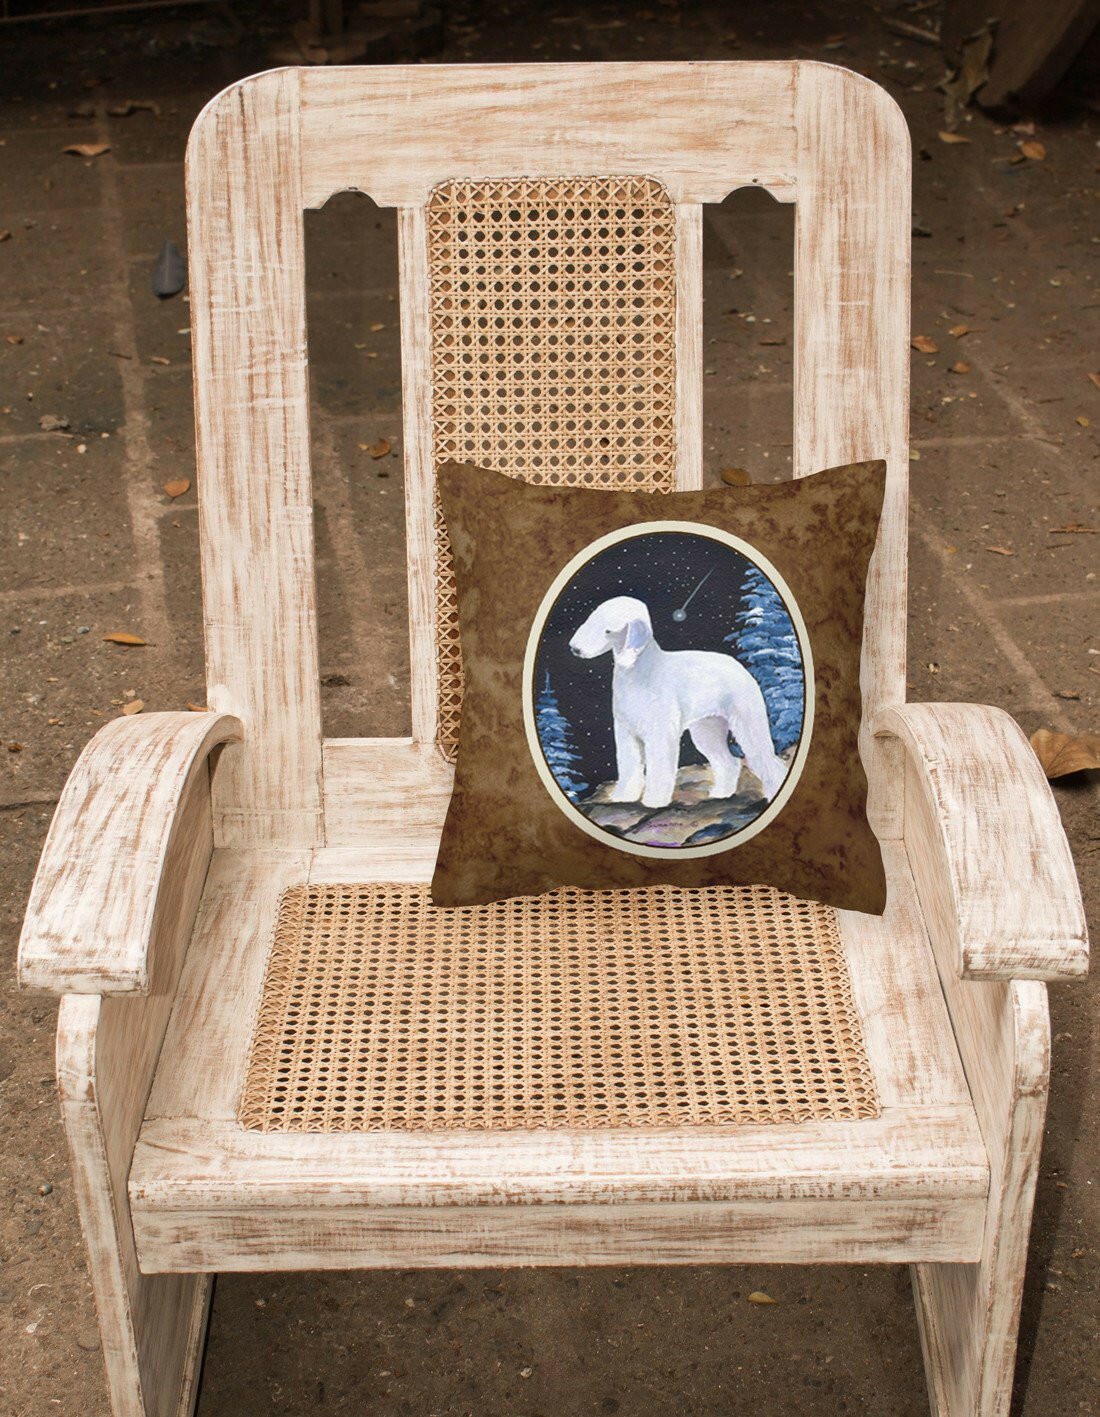 Starry Night Bedlington Terrier Decorative   Canvas Fabric Pillow by Caroline's Treasures